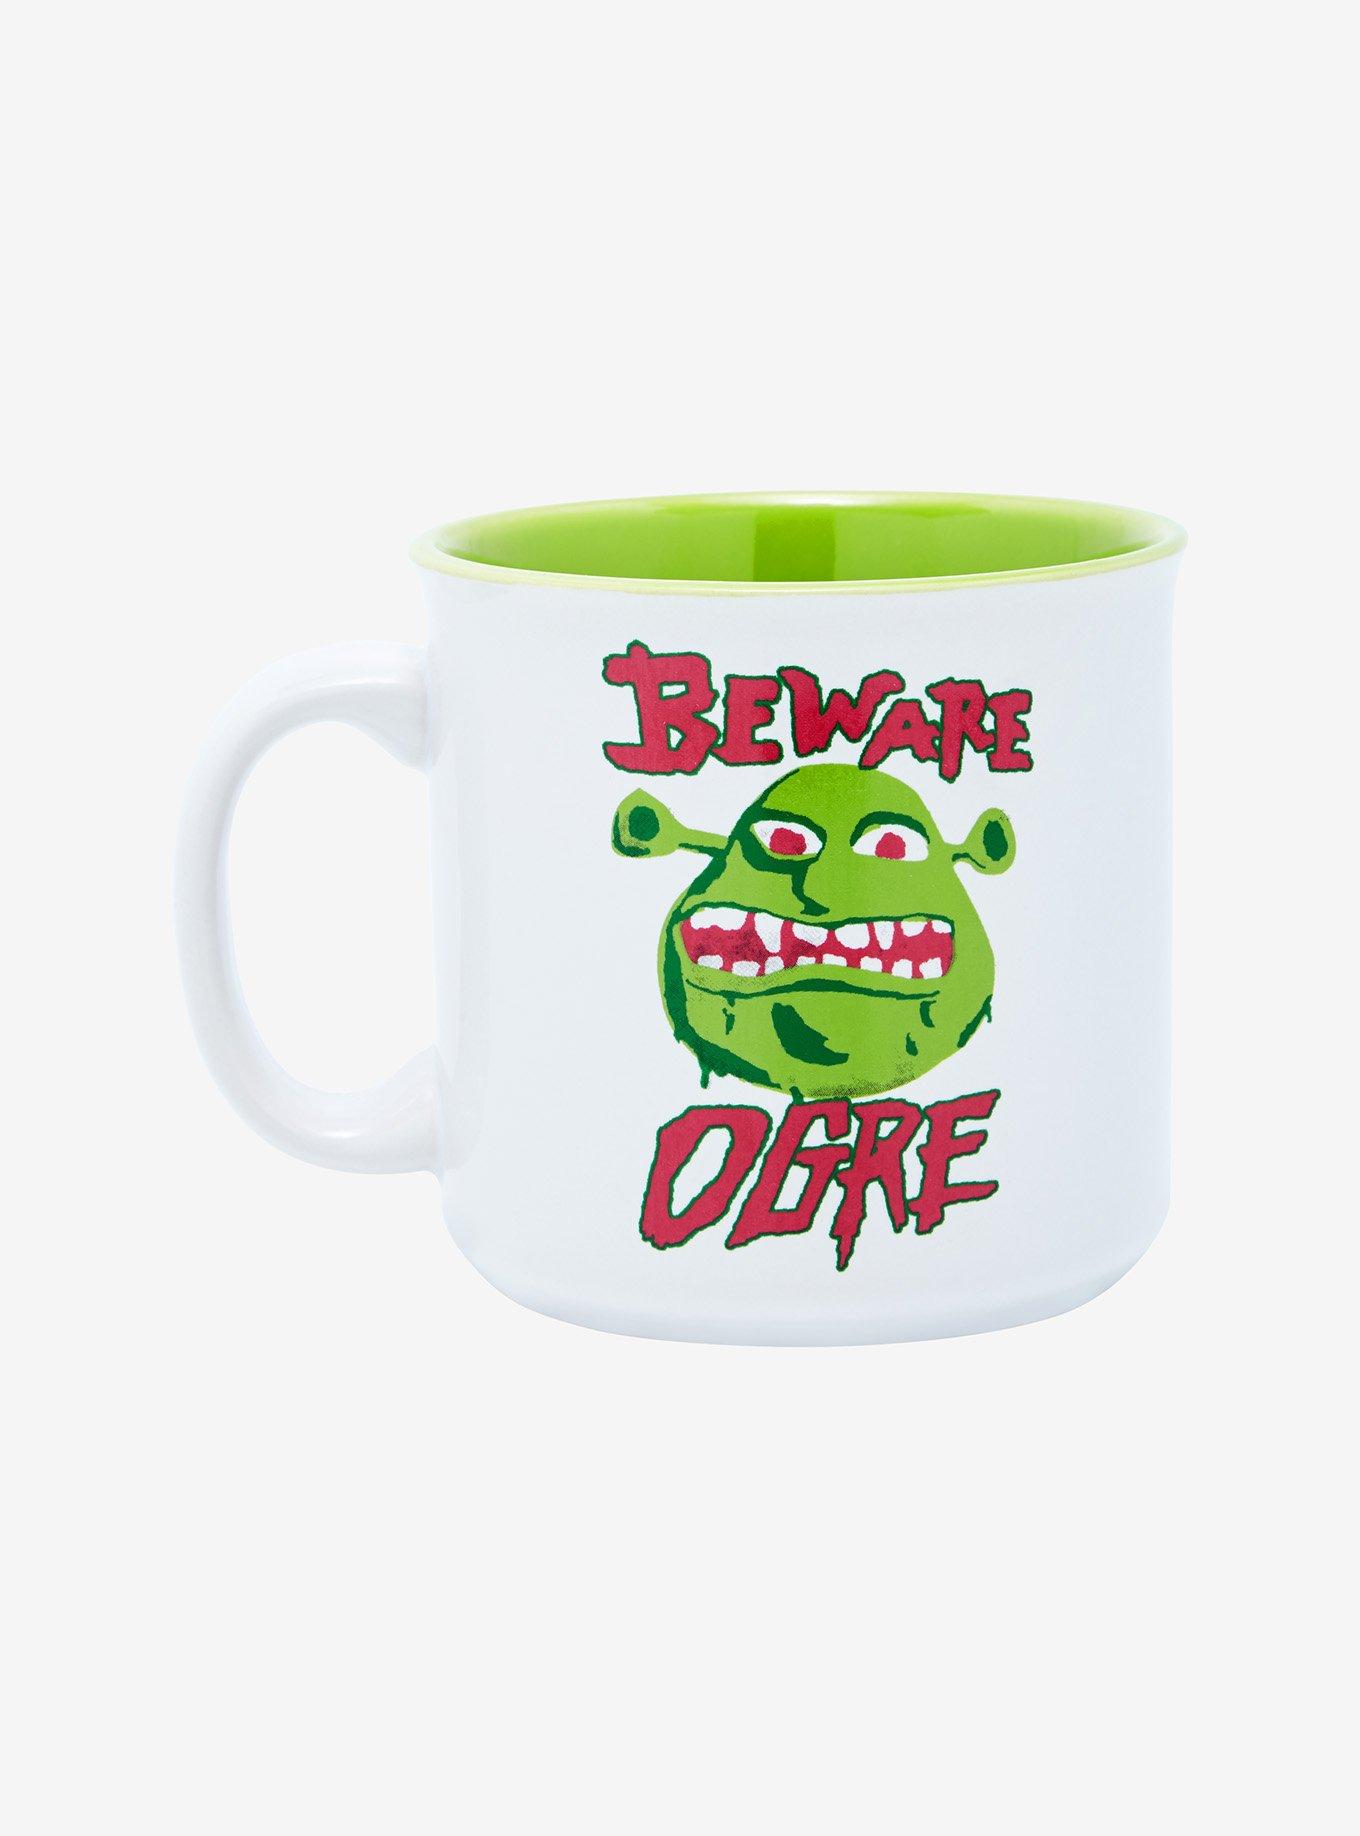 Shrek Coffee Mug for Sale by OtterPoppy